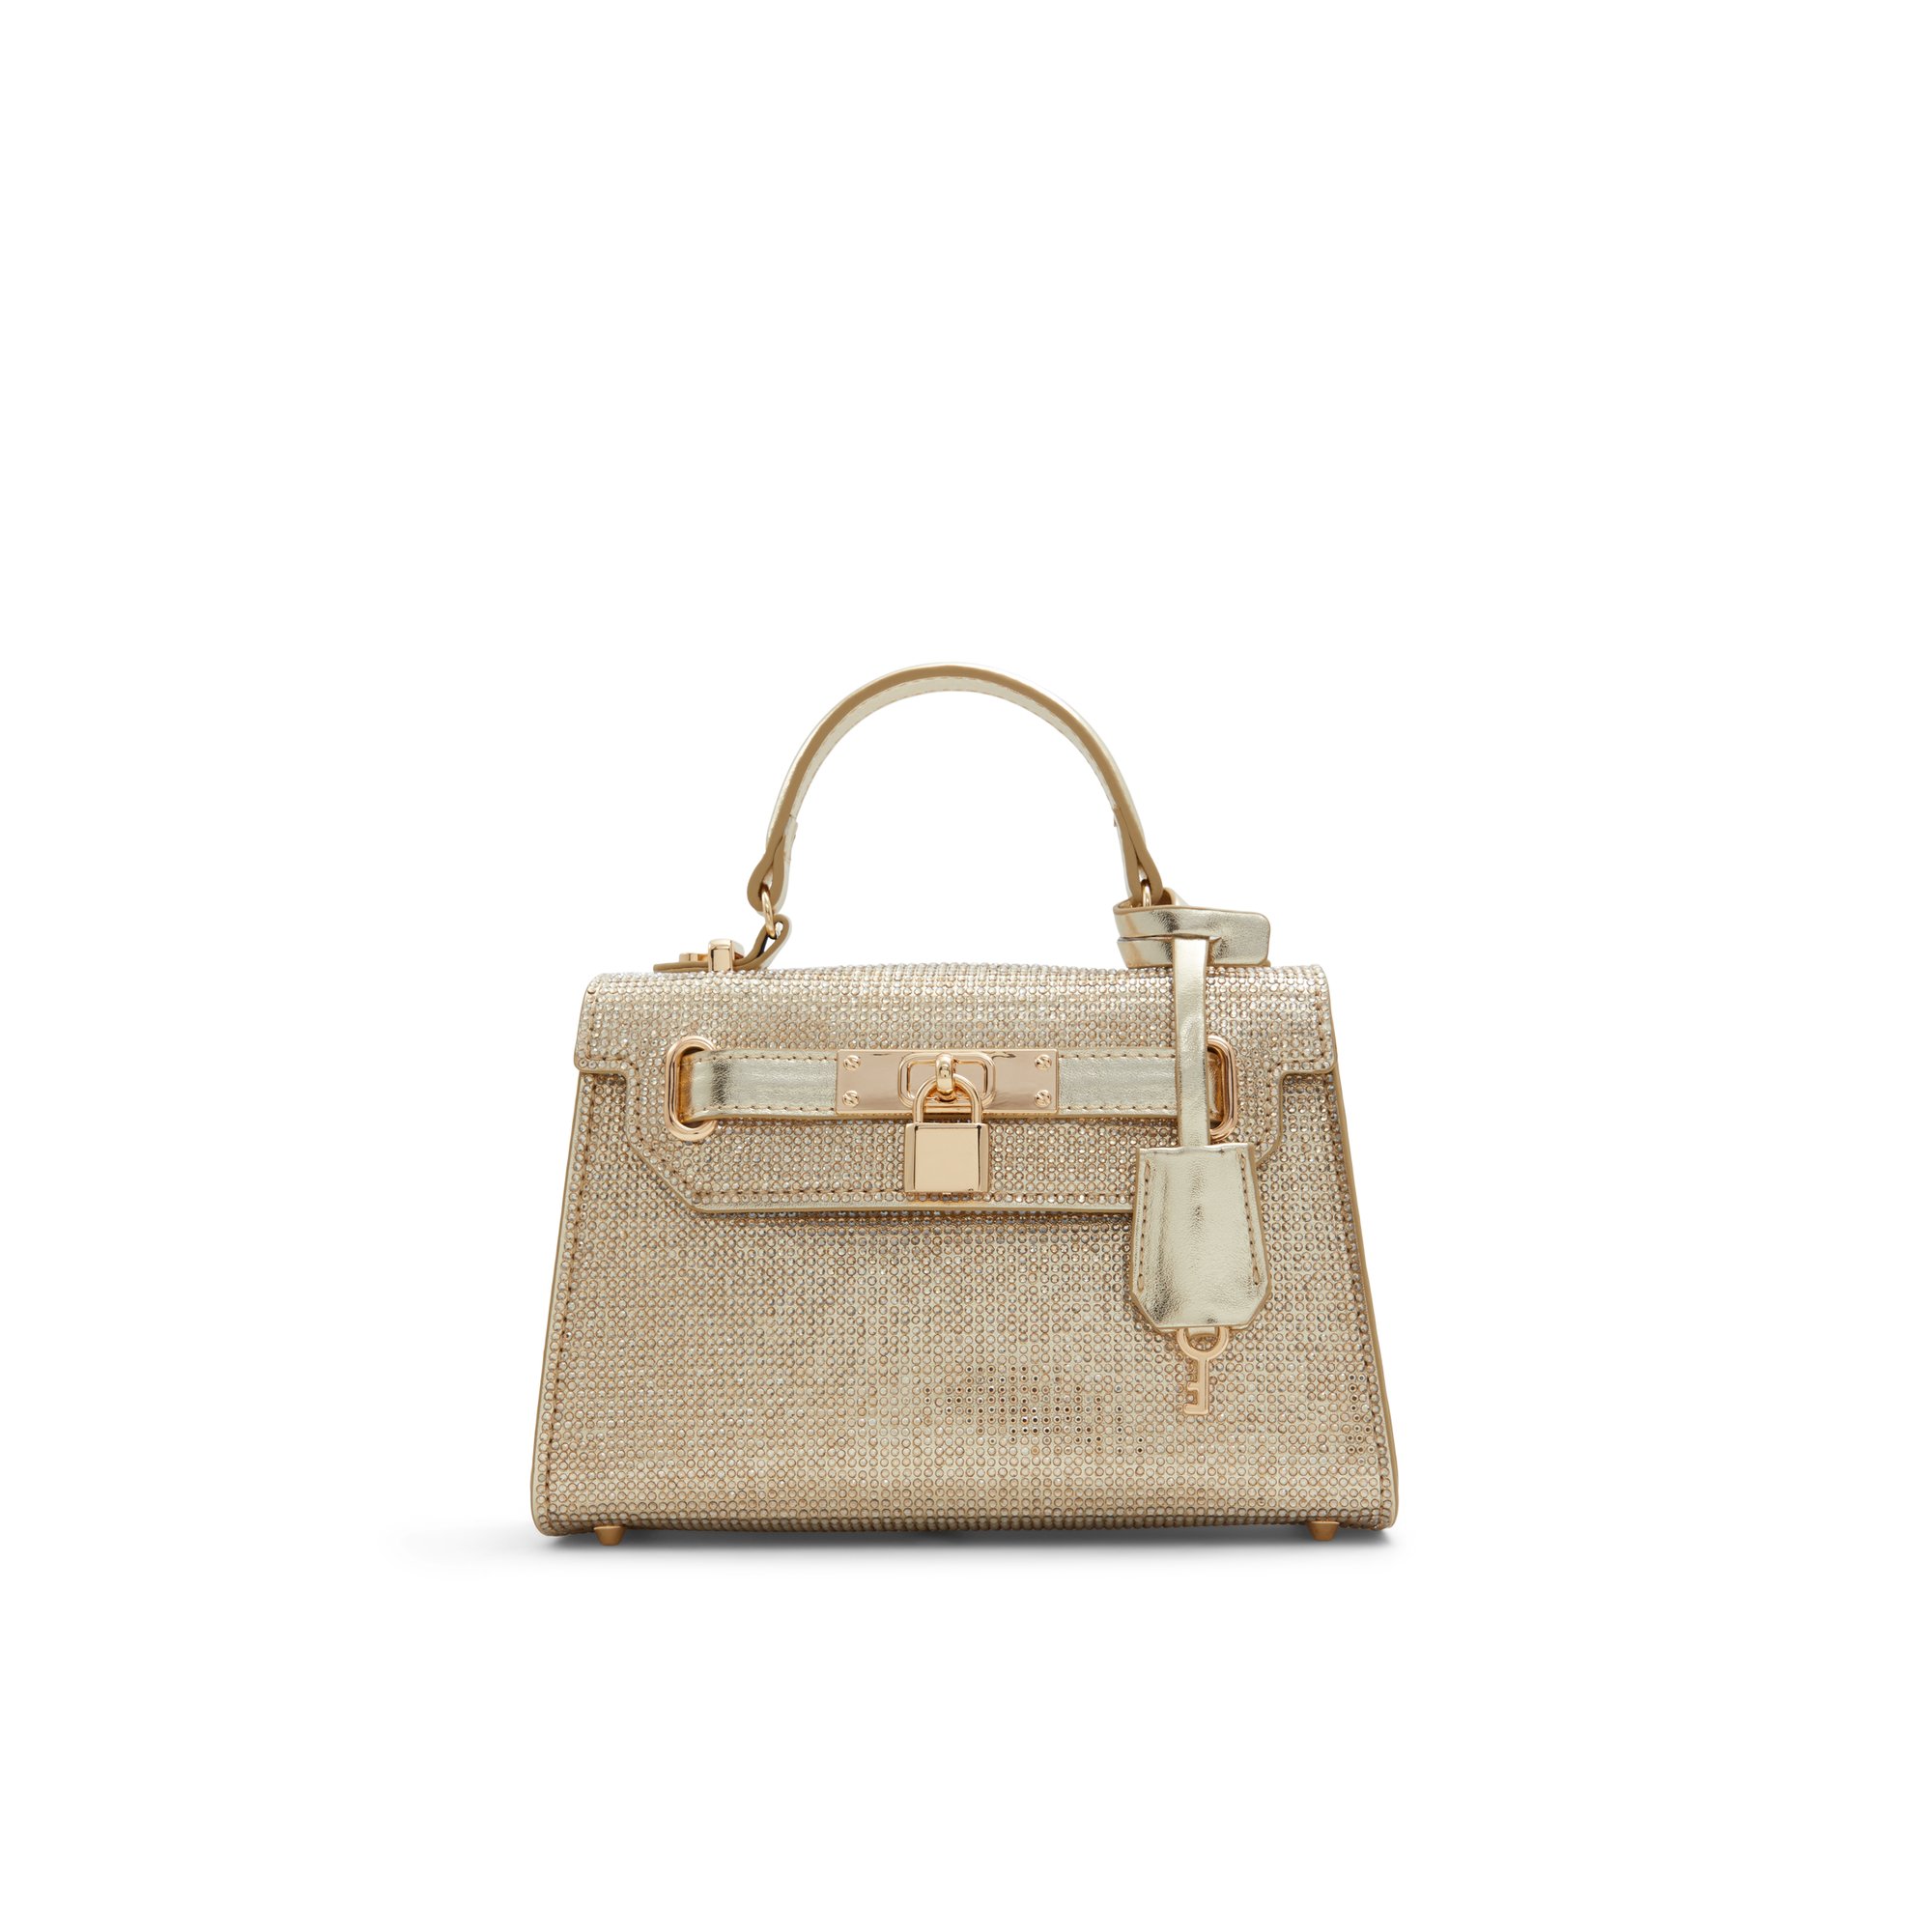 ALDO Caisynx - Women's Top Handle Handbag - Gold